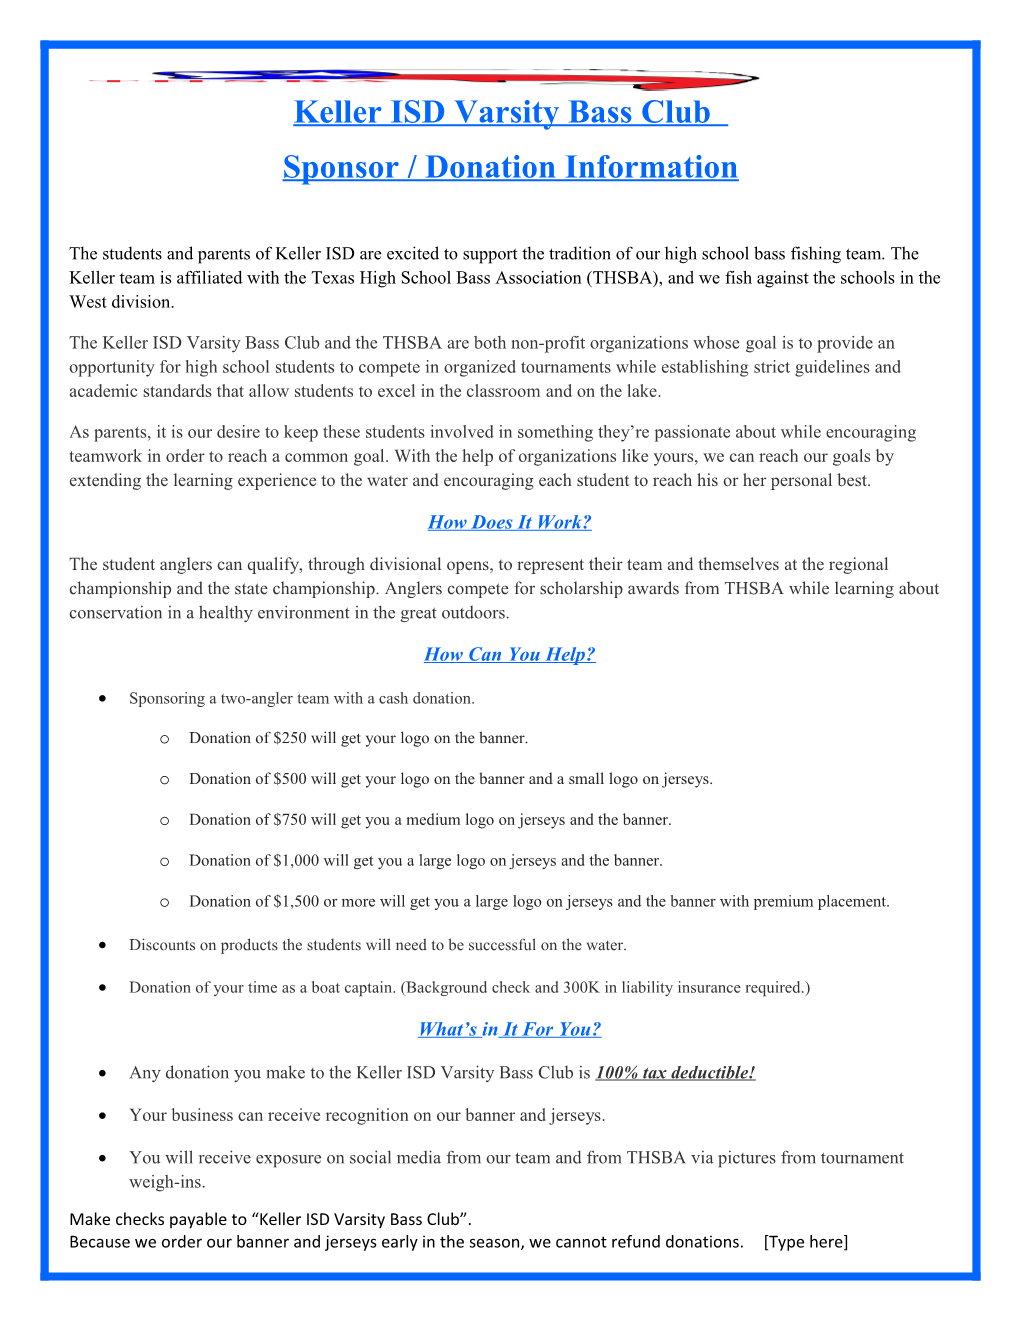 Sponsor / Donation Information